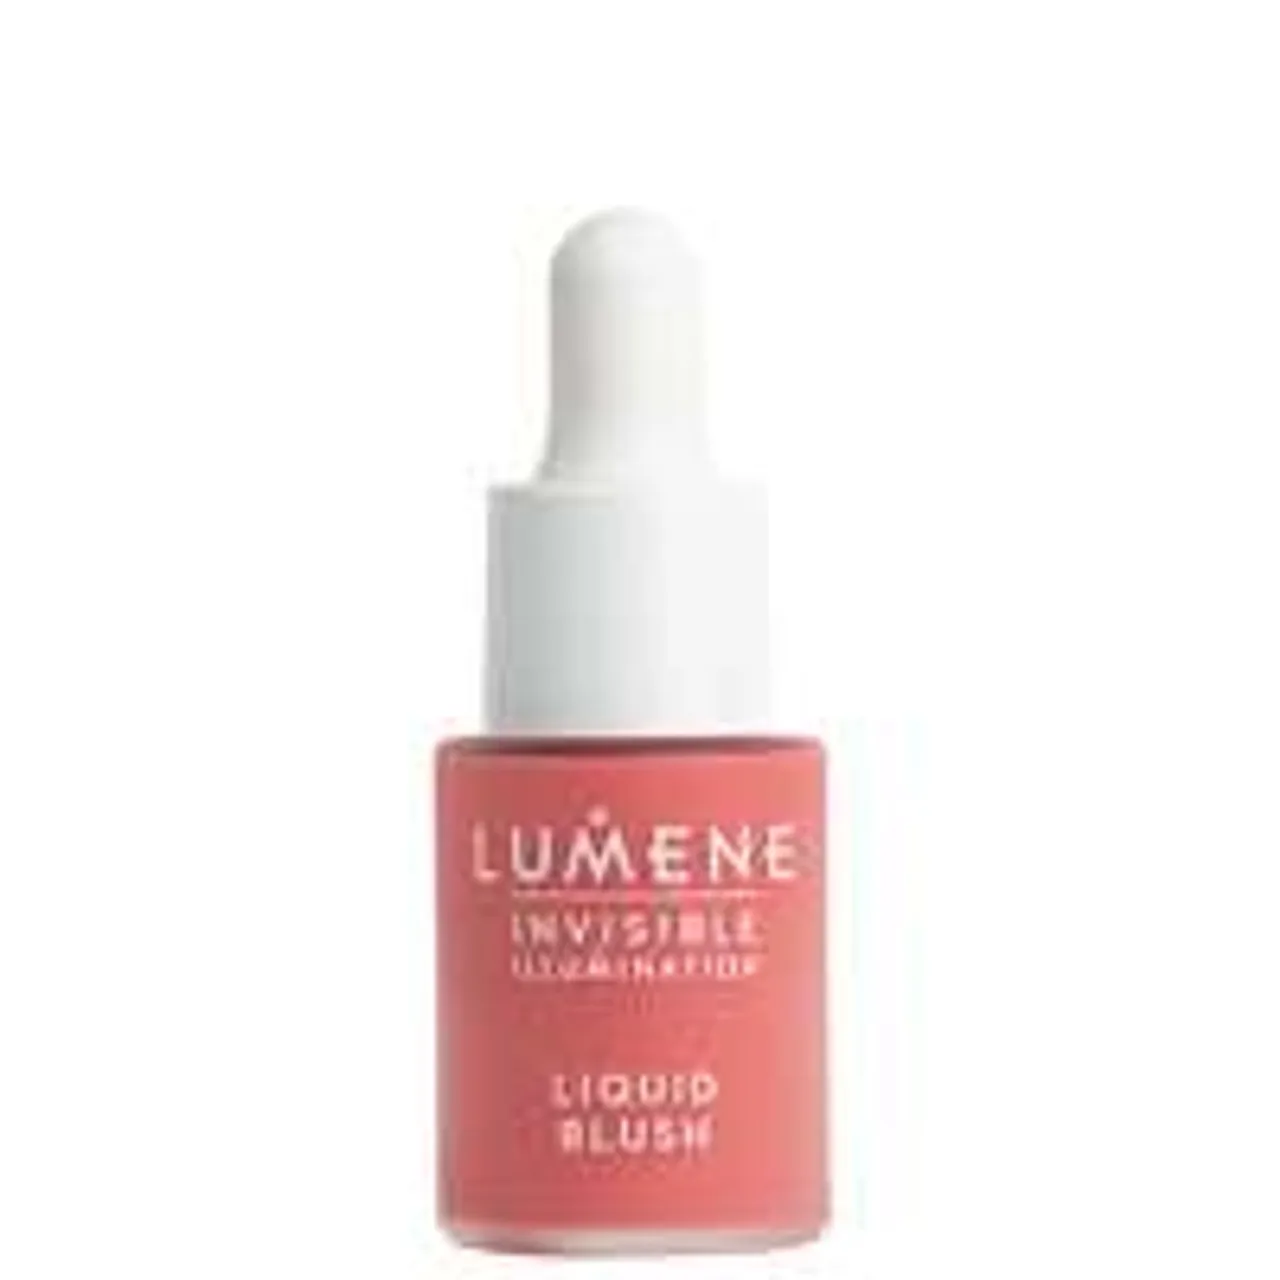 Lumene Invisible Illumination Liquid Blush Bright Bloom 15ml